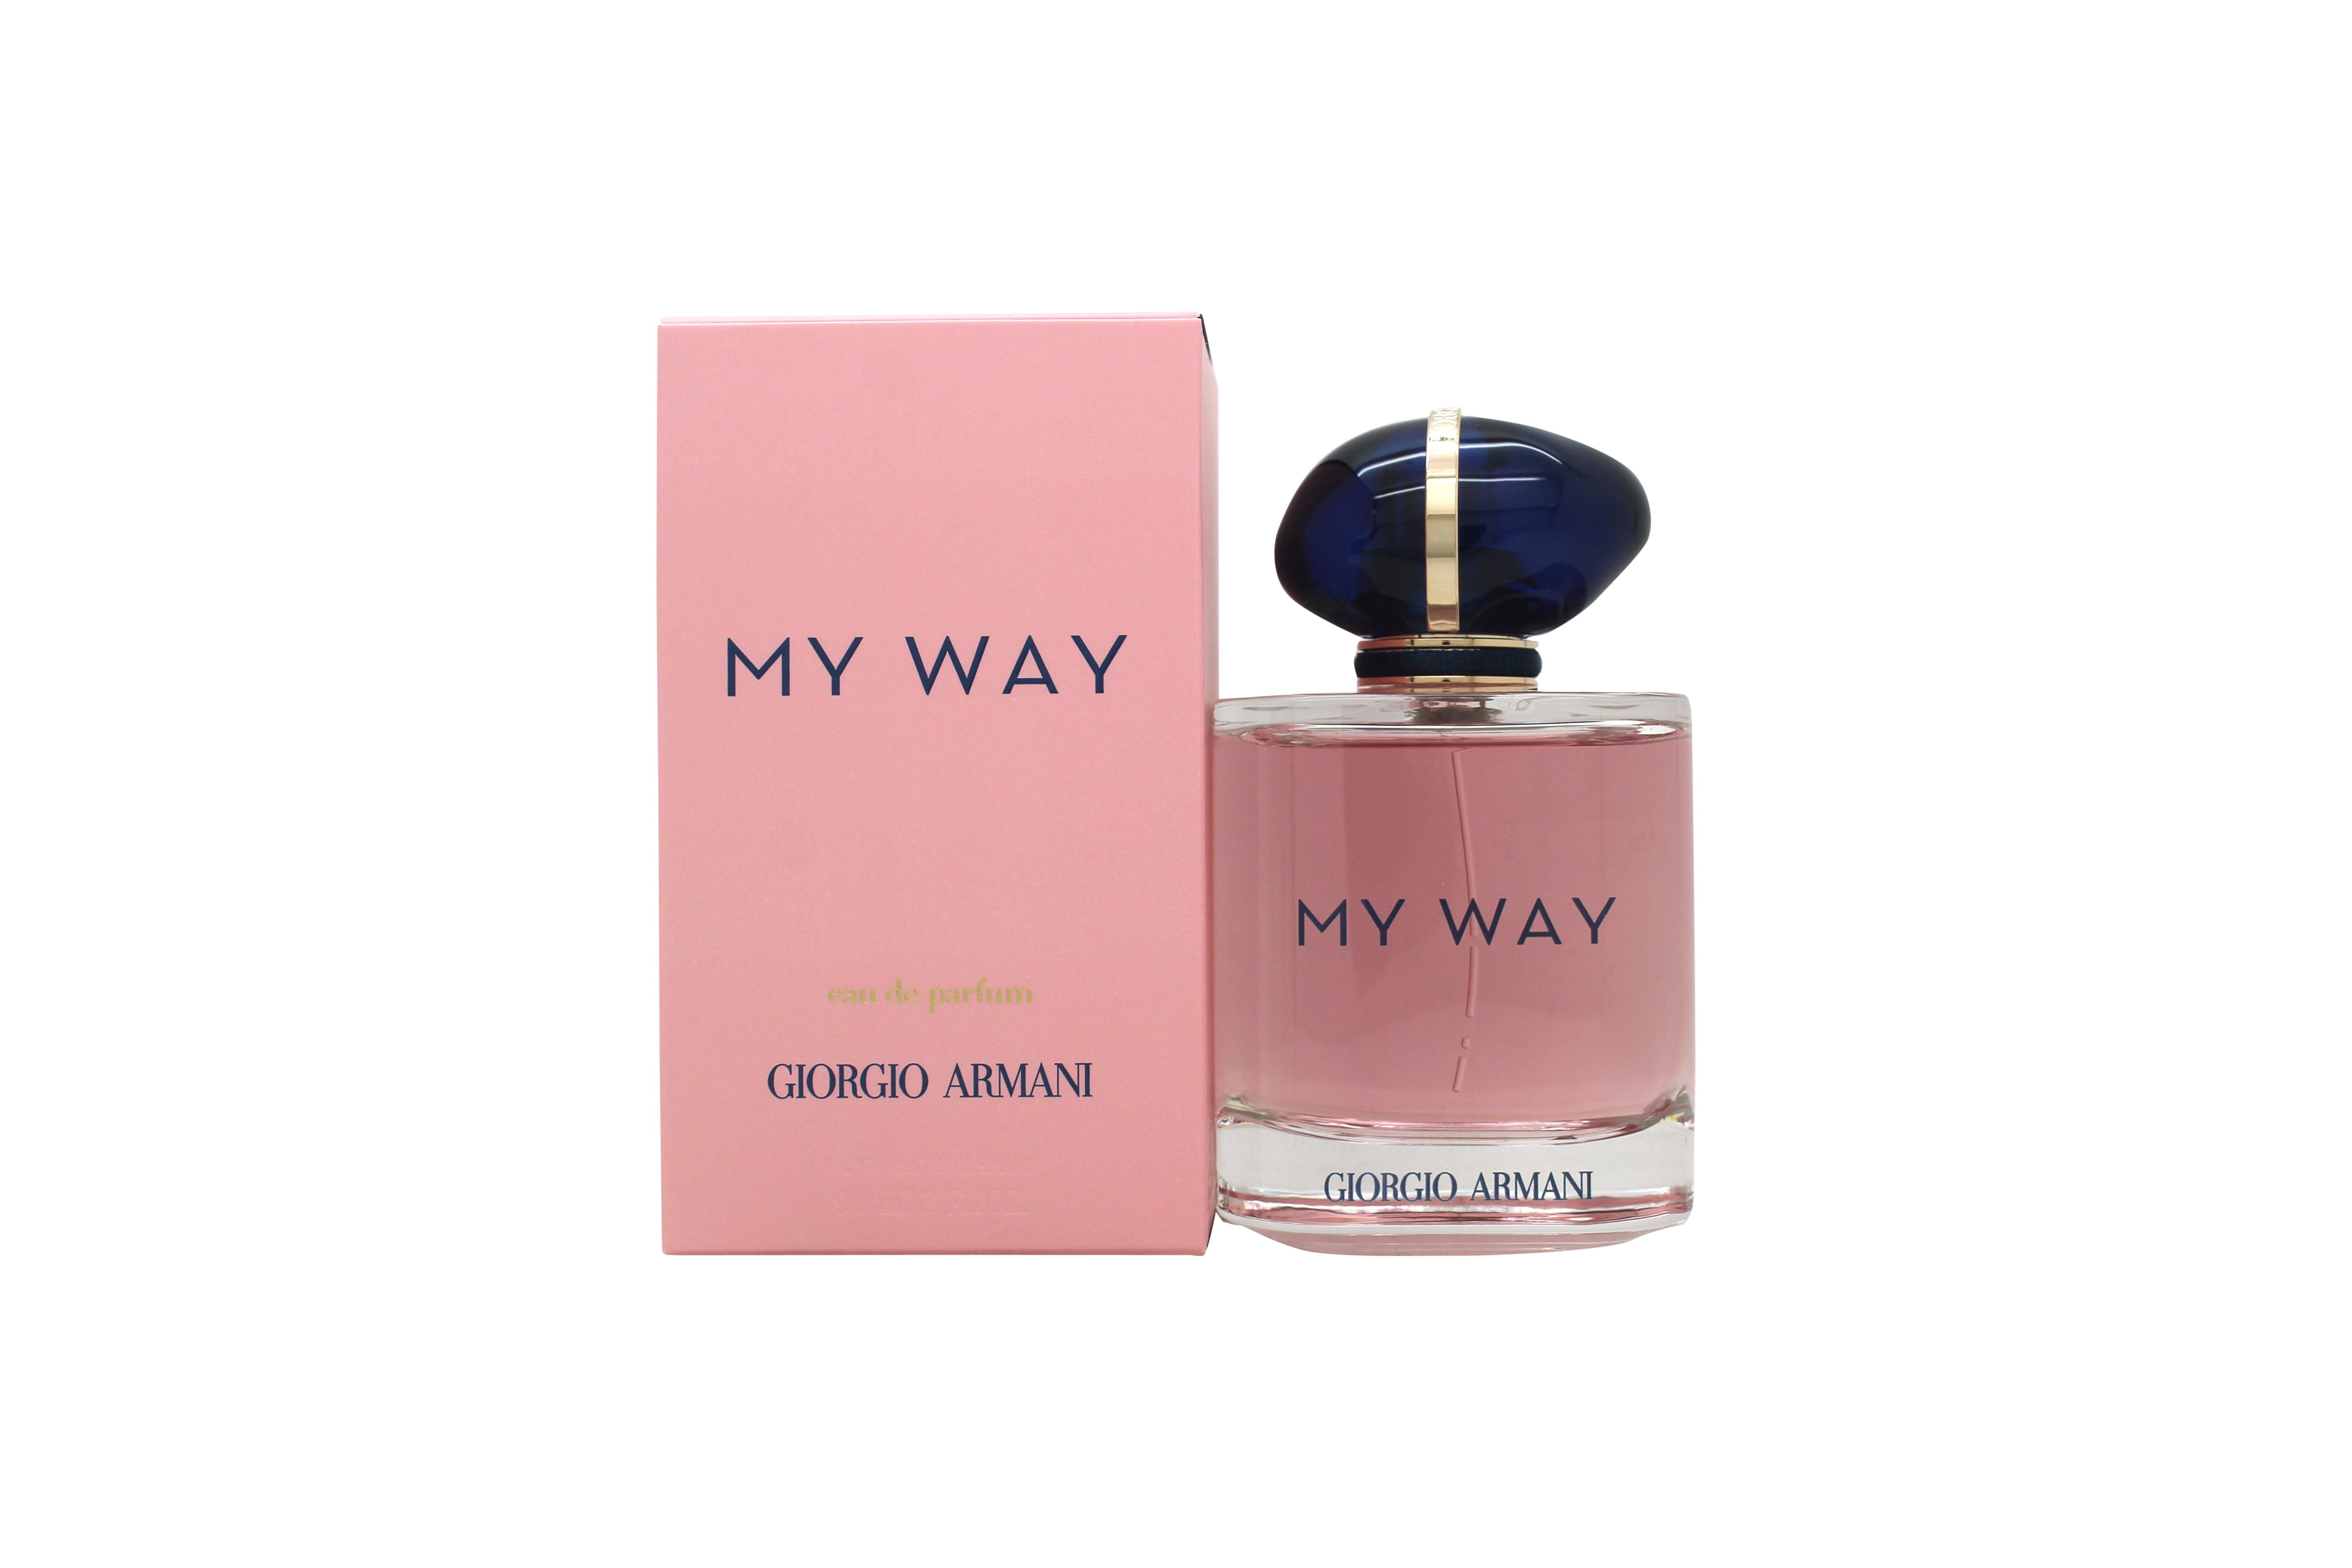 Giorgio Armani My Way Eau de Parfum 90ml Spray